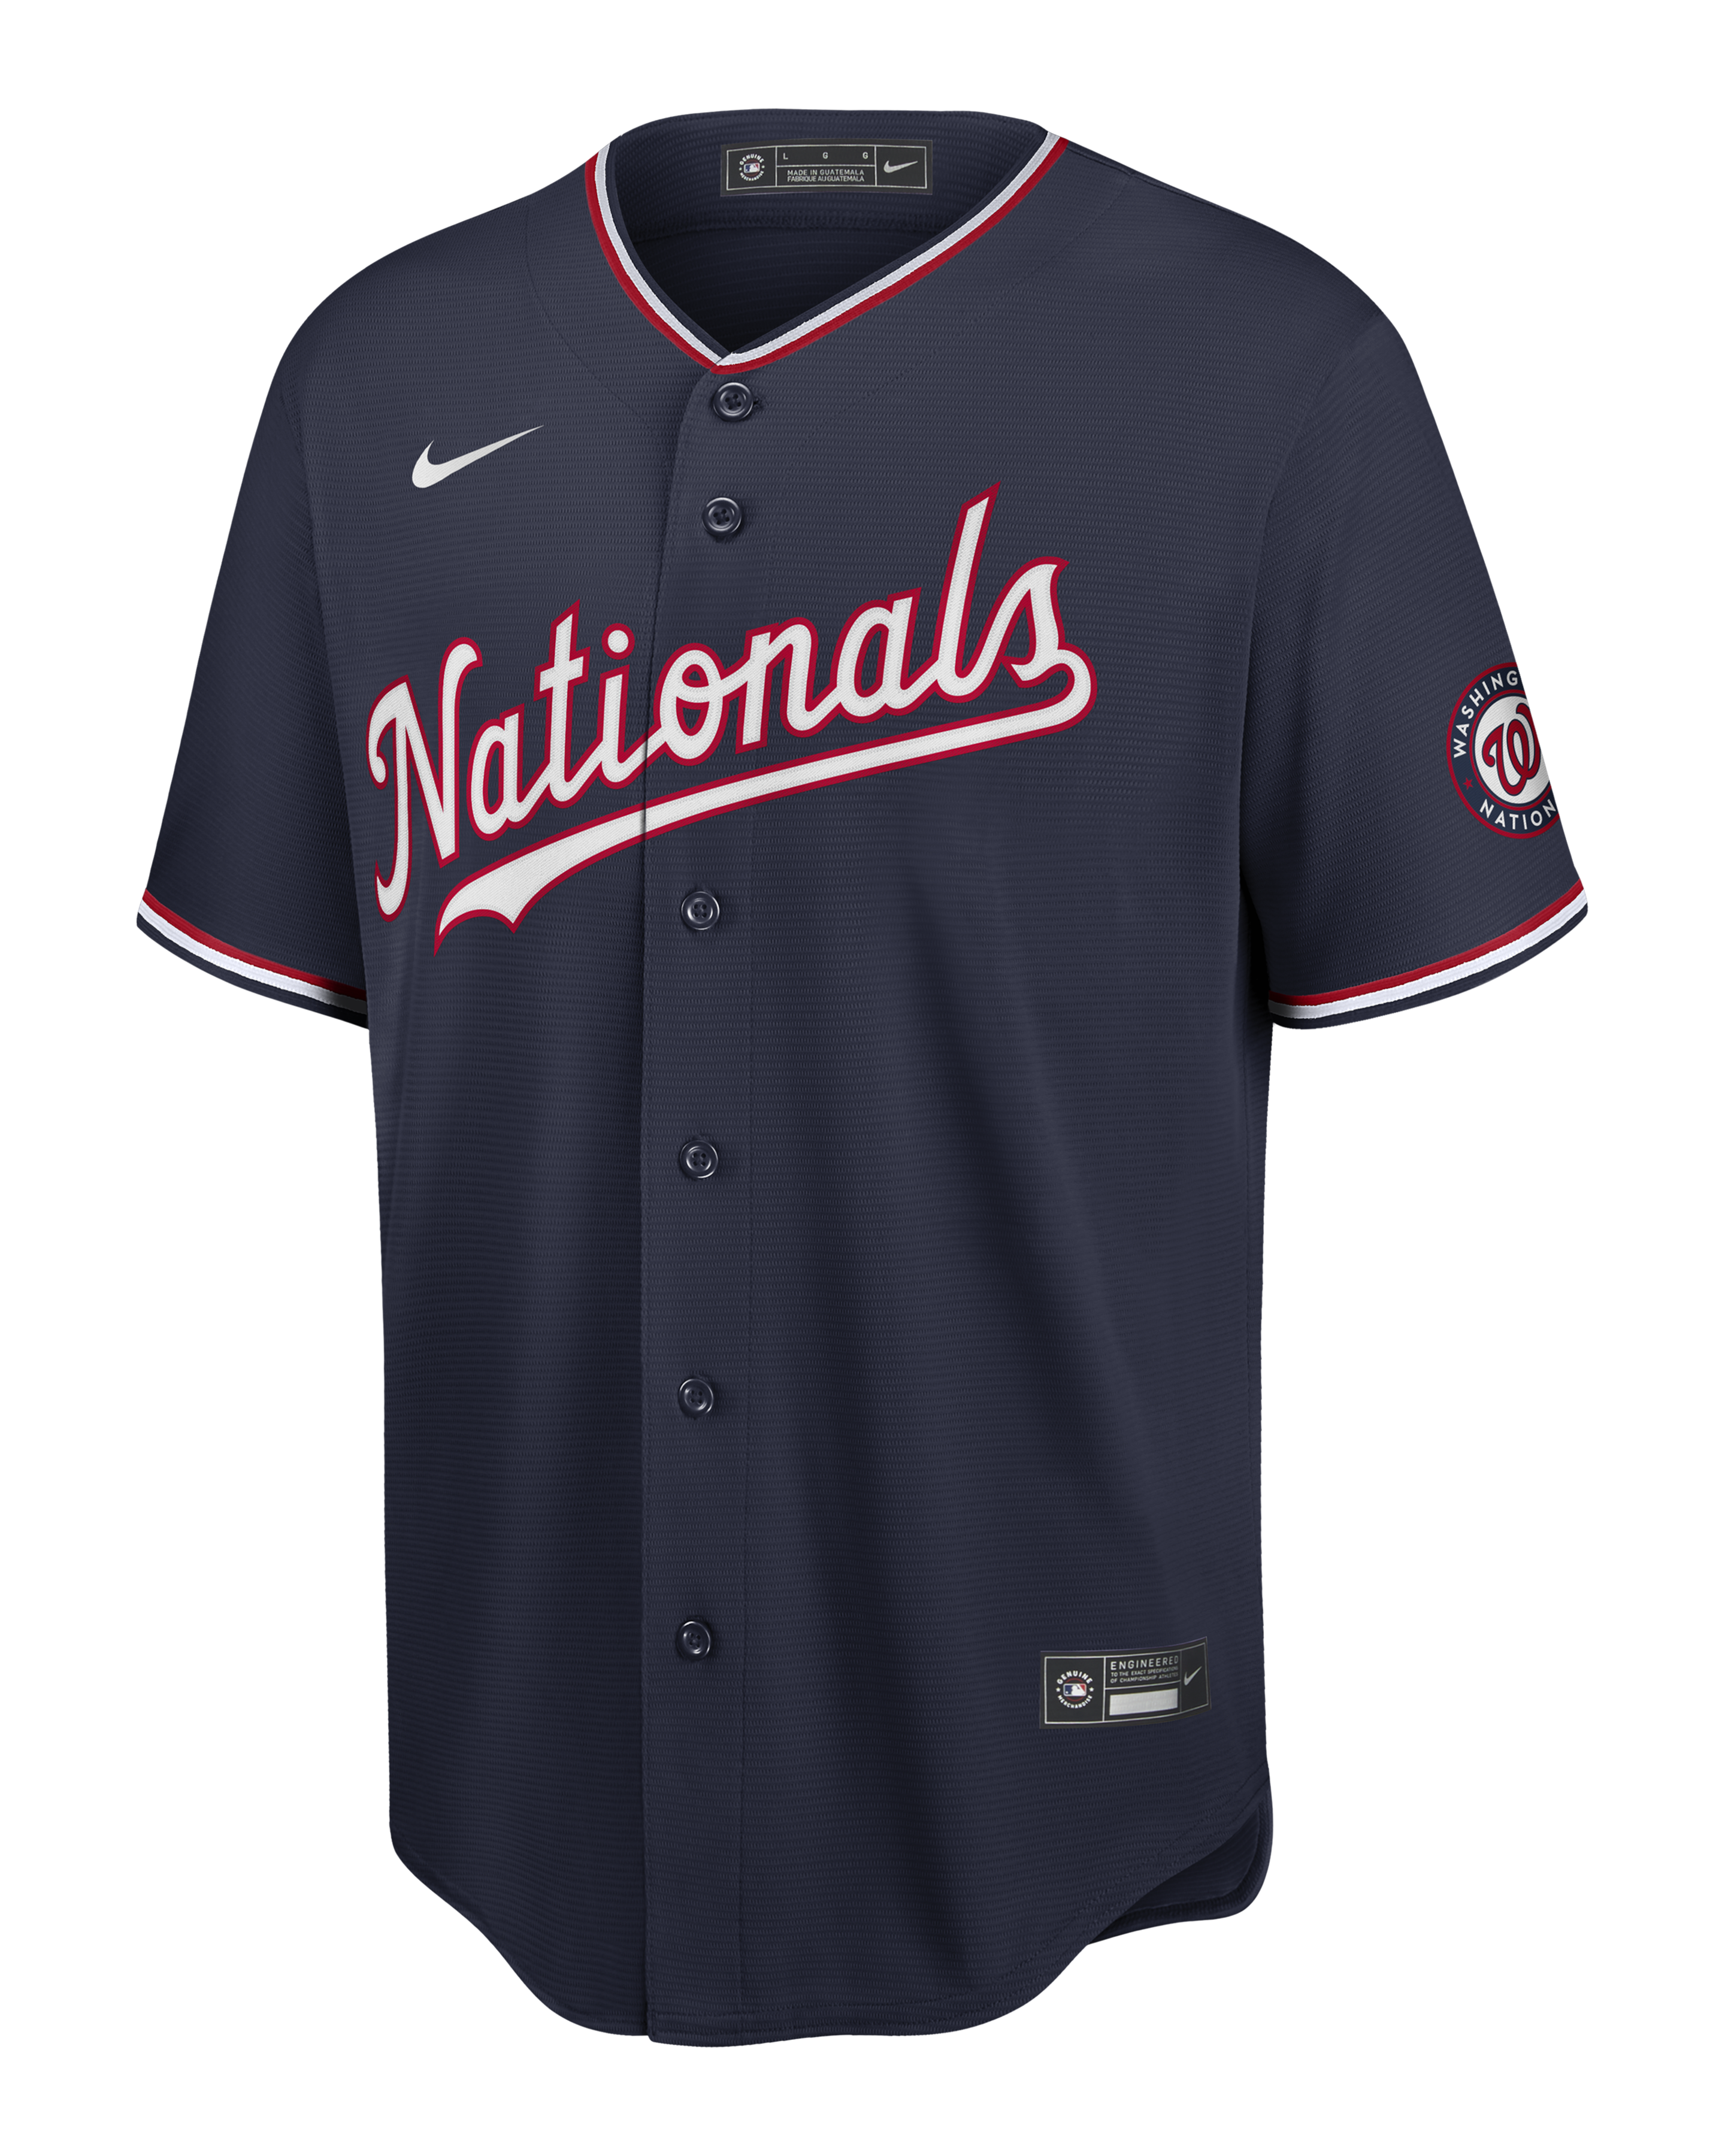 MLB Washington Nationals Men's Replica Baseball Jersey.